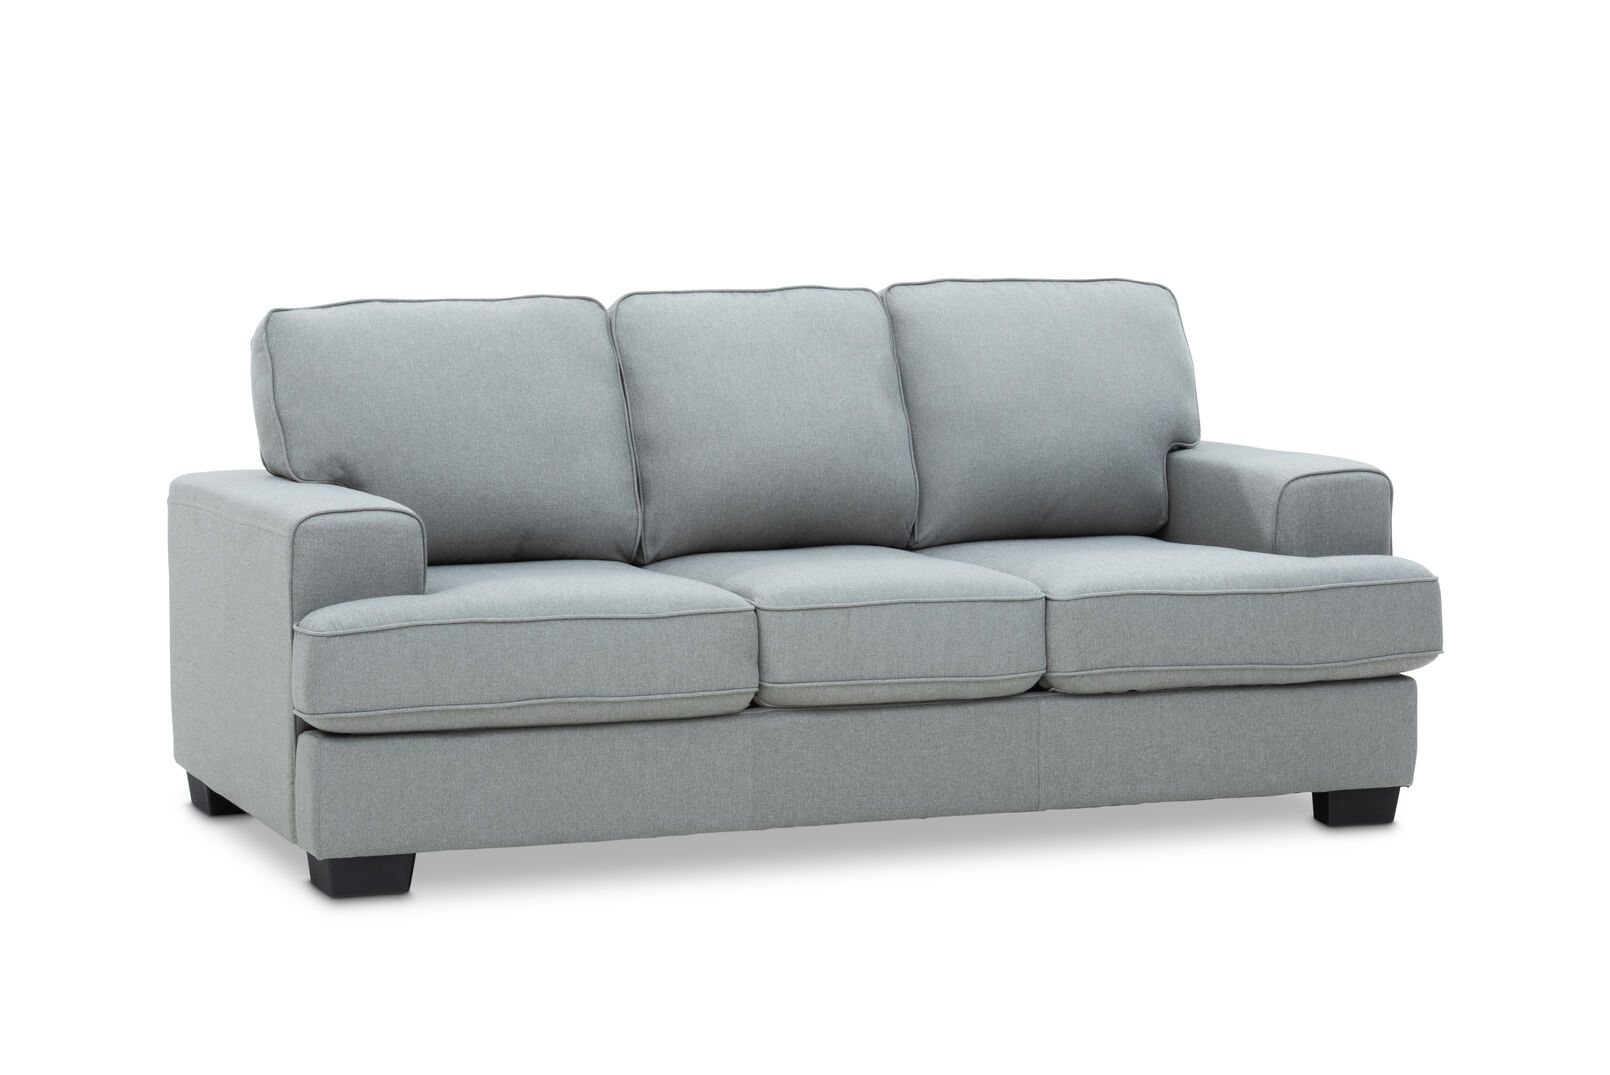 LIGHT GREY LAYLA Fabric 3 Seater Sofa Bed | Amart Furniture